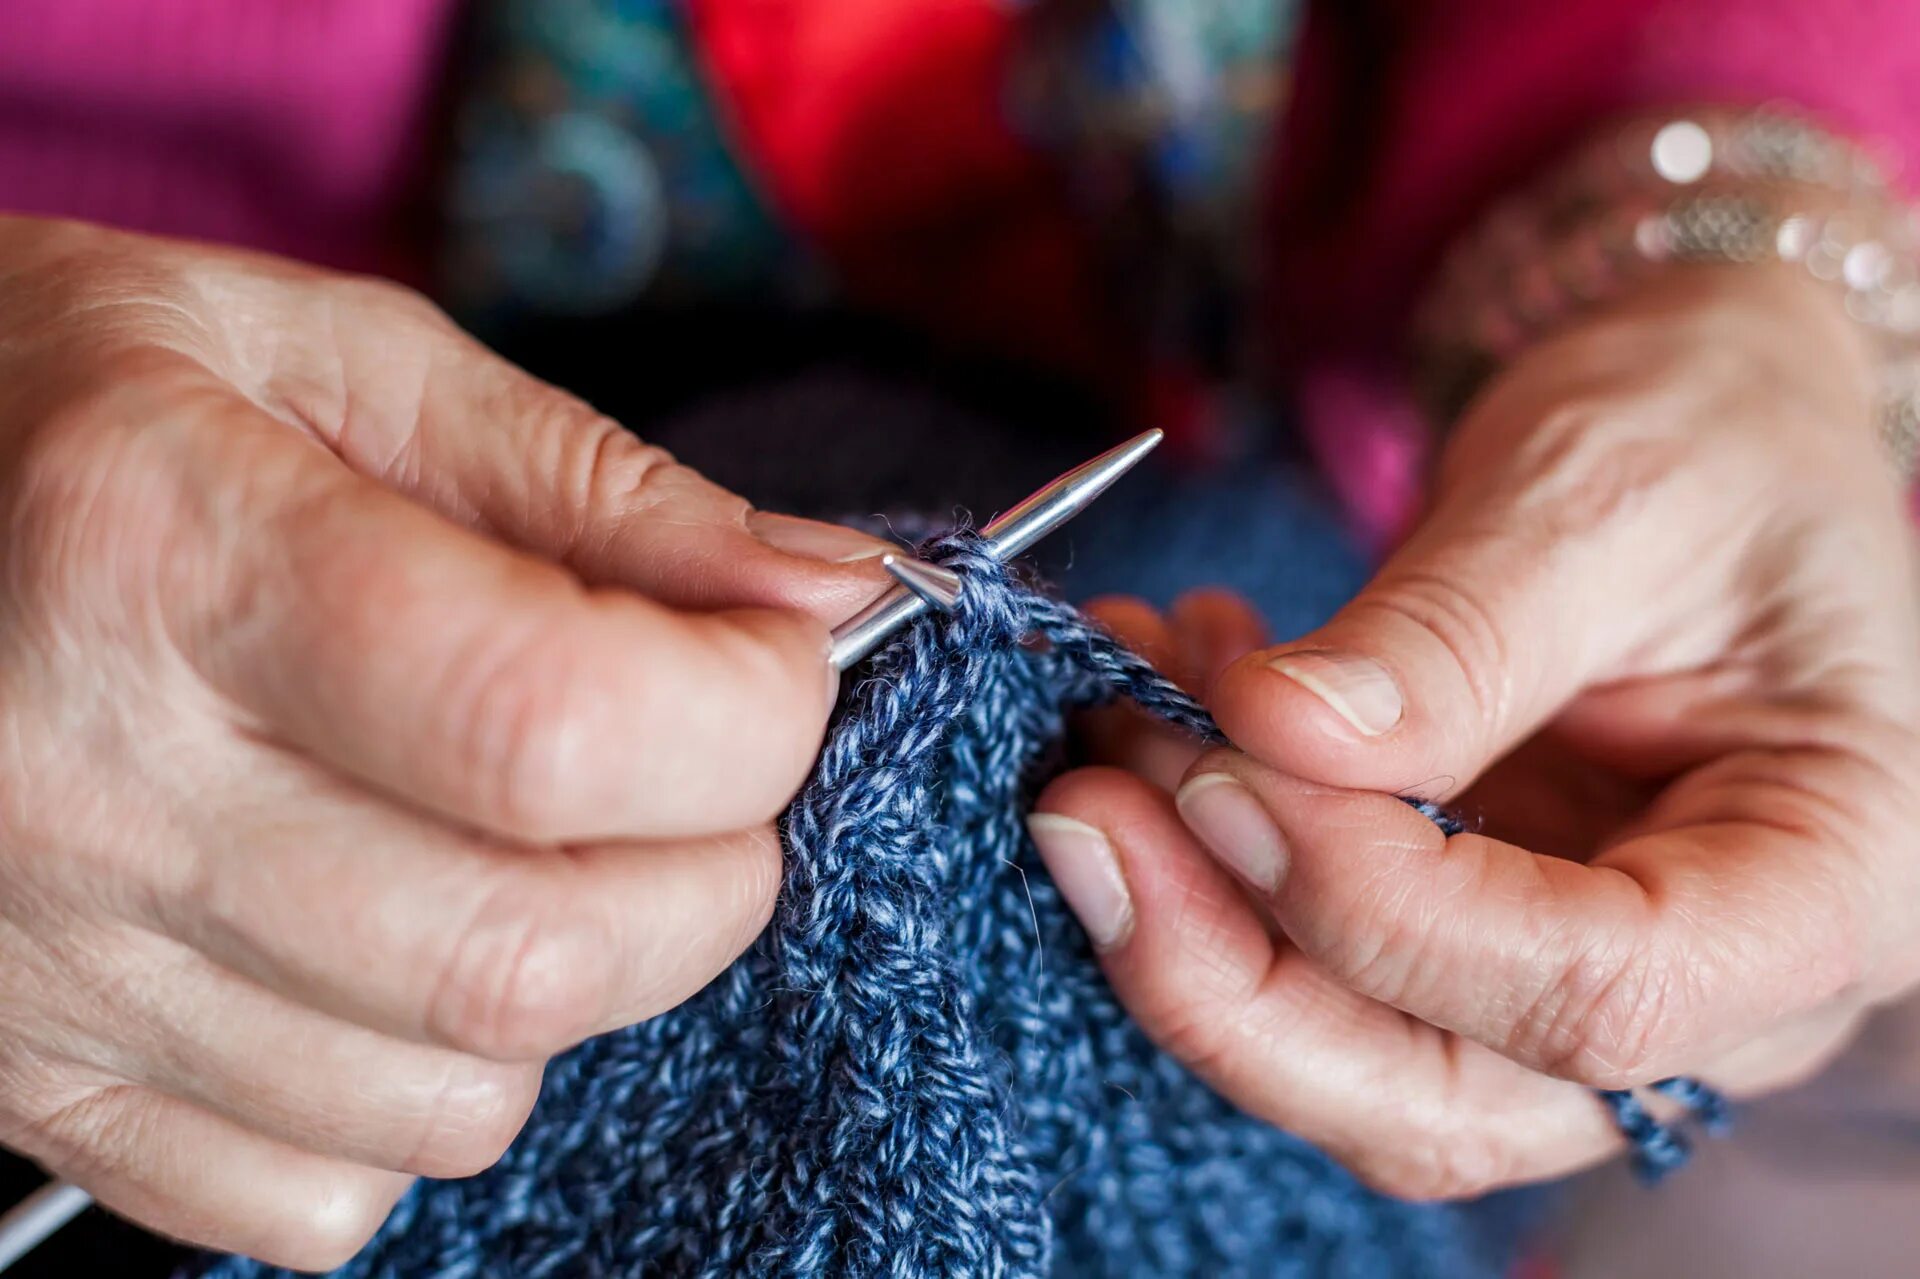 Knitting hands. Вязание руками. Руки вяжут. Женские руки вязание. Вязание крючком руки.